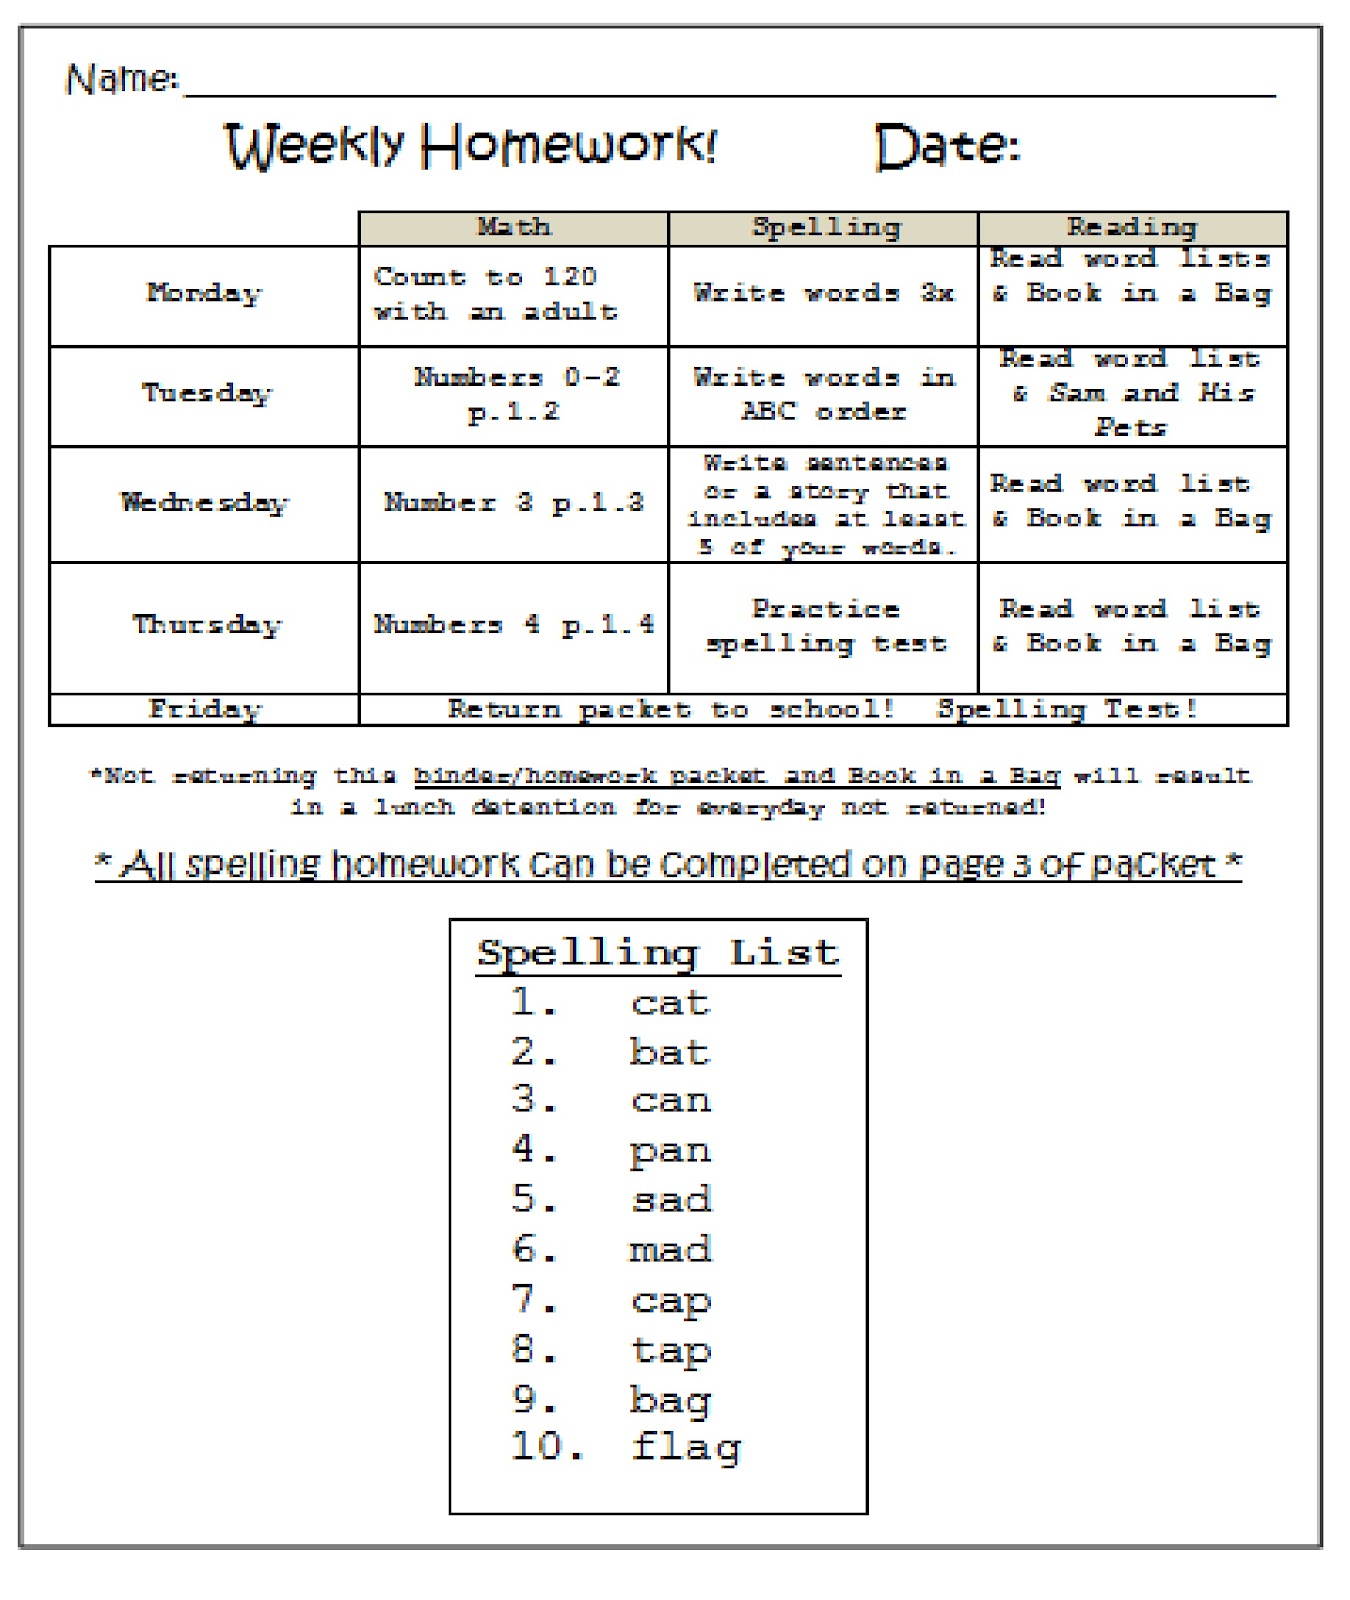 Student weekly homework page